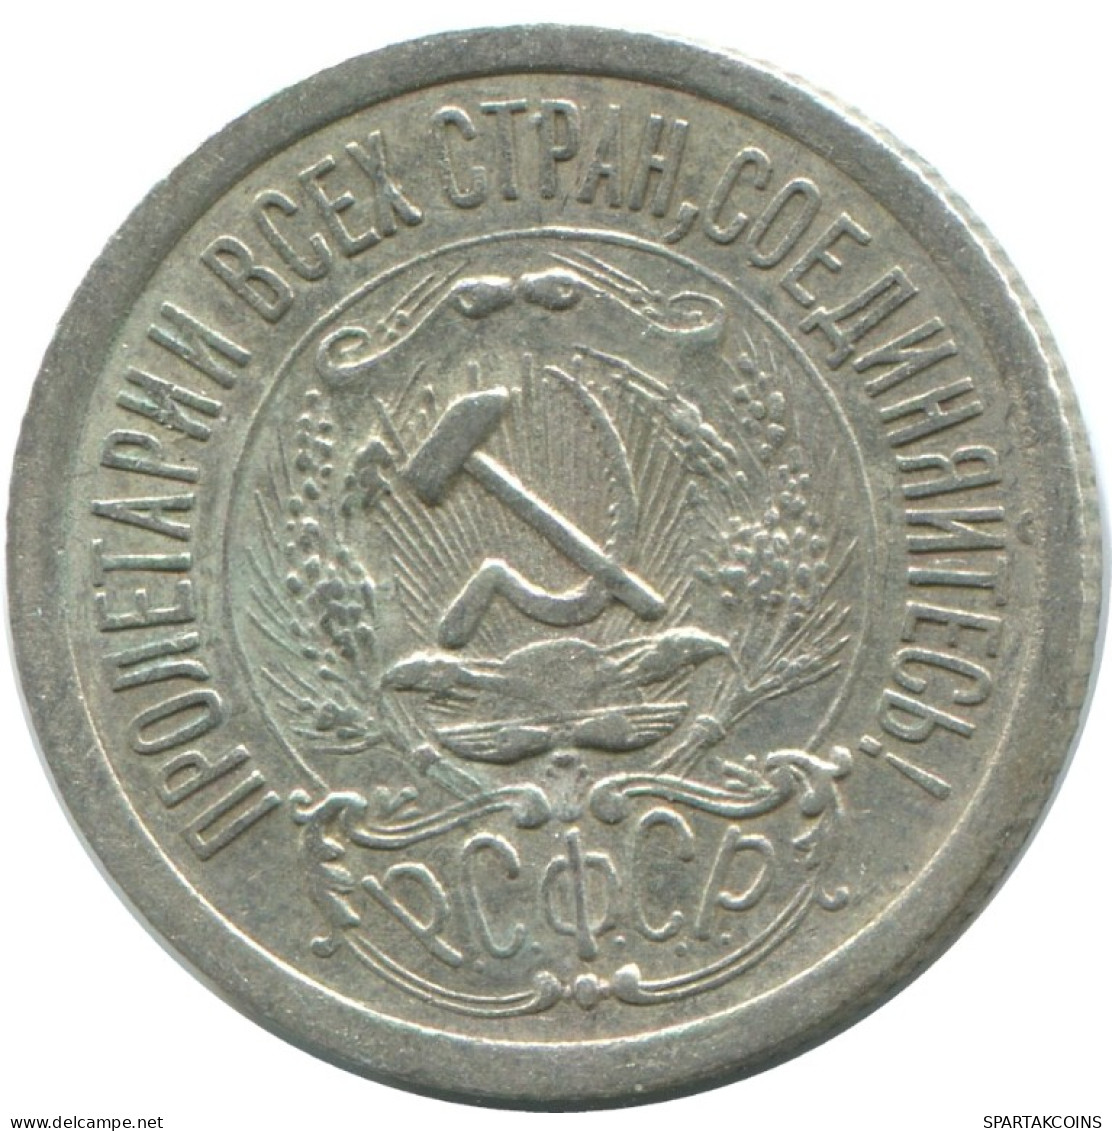 15 KOPEKS 1923 RUSSIA RSFSR SILVER Coin HIGH GRADE #AF103.4.U.A - Rusia